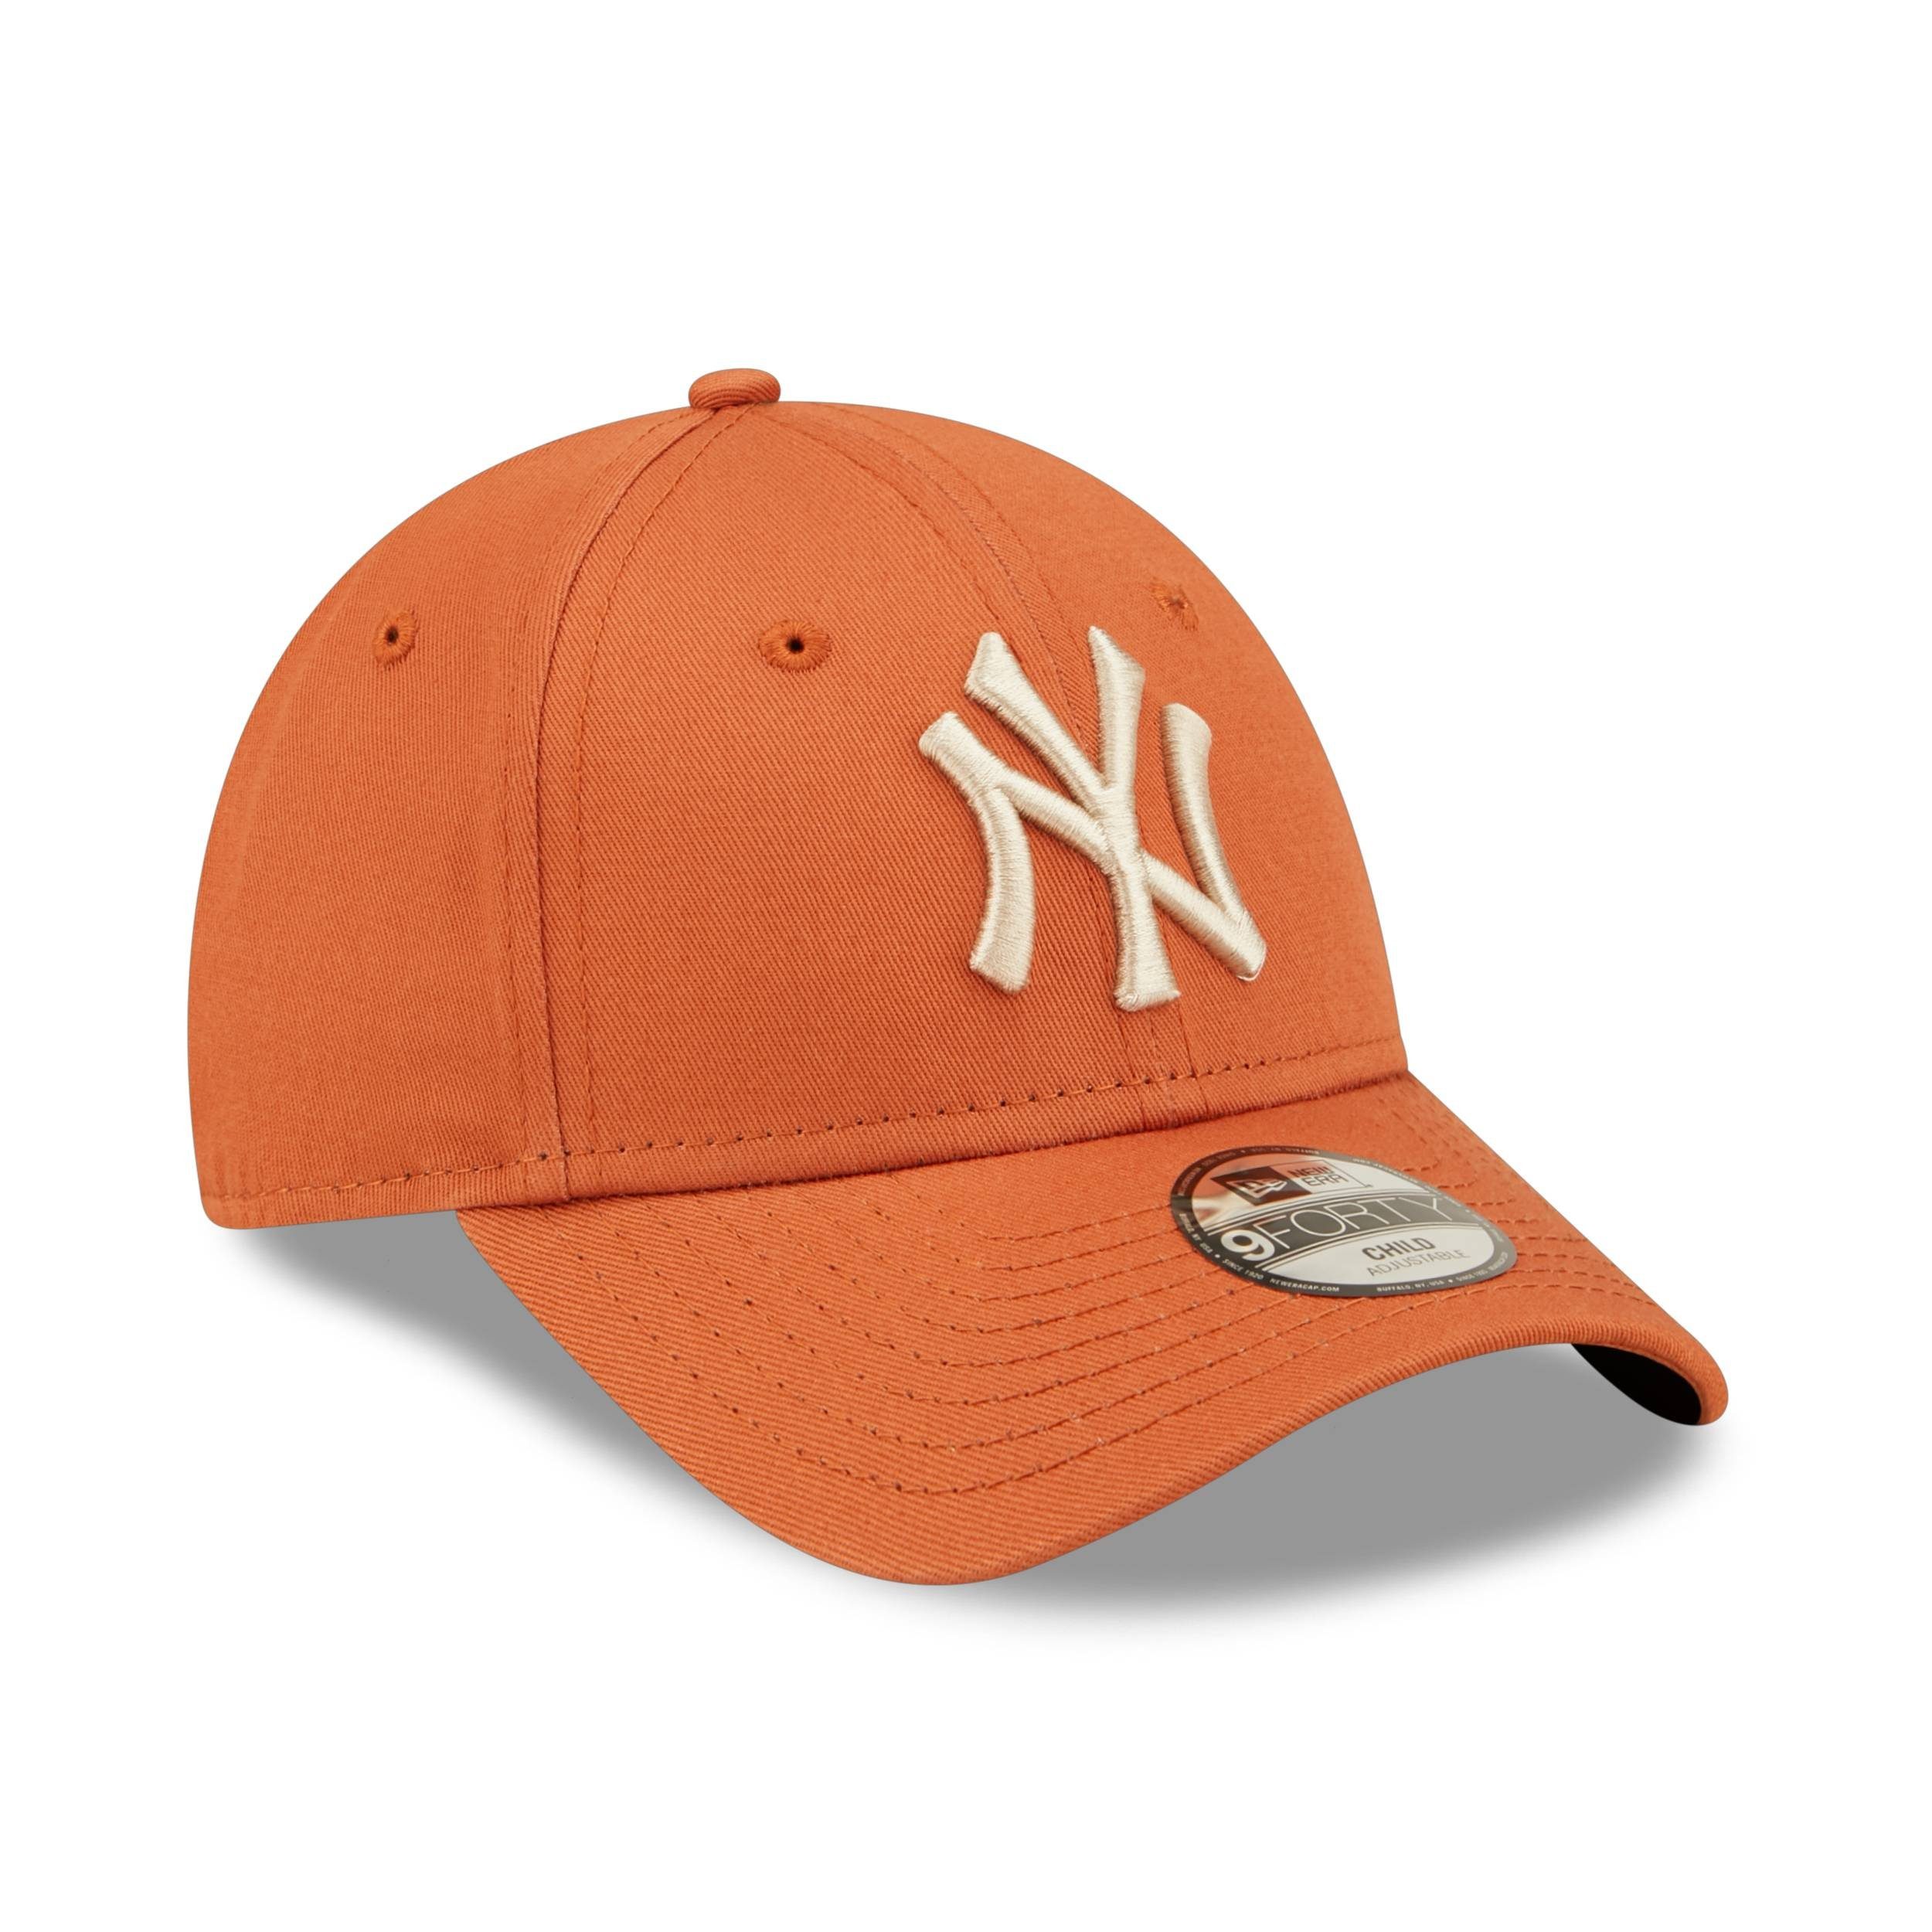 Baseball orange Cap 9Forty League Era Yankees York New New Era Cap Chyt New